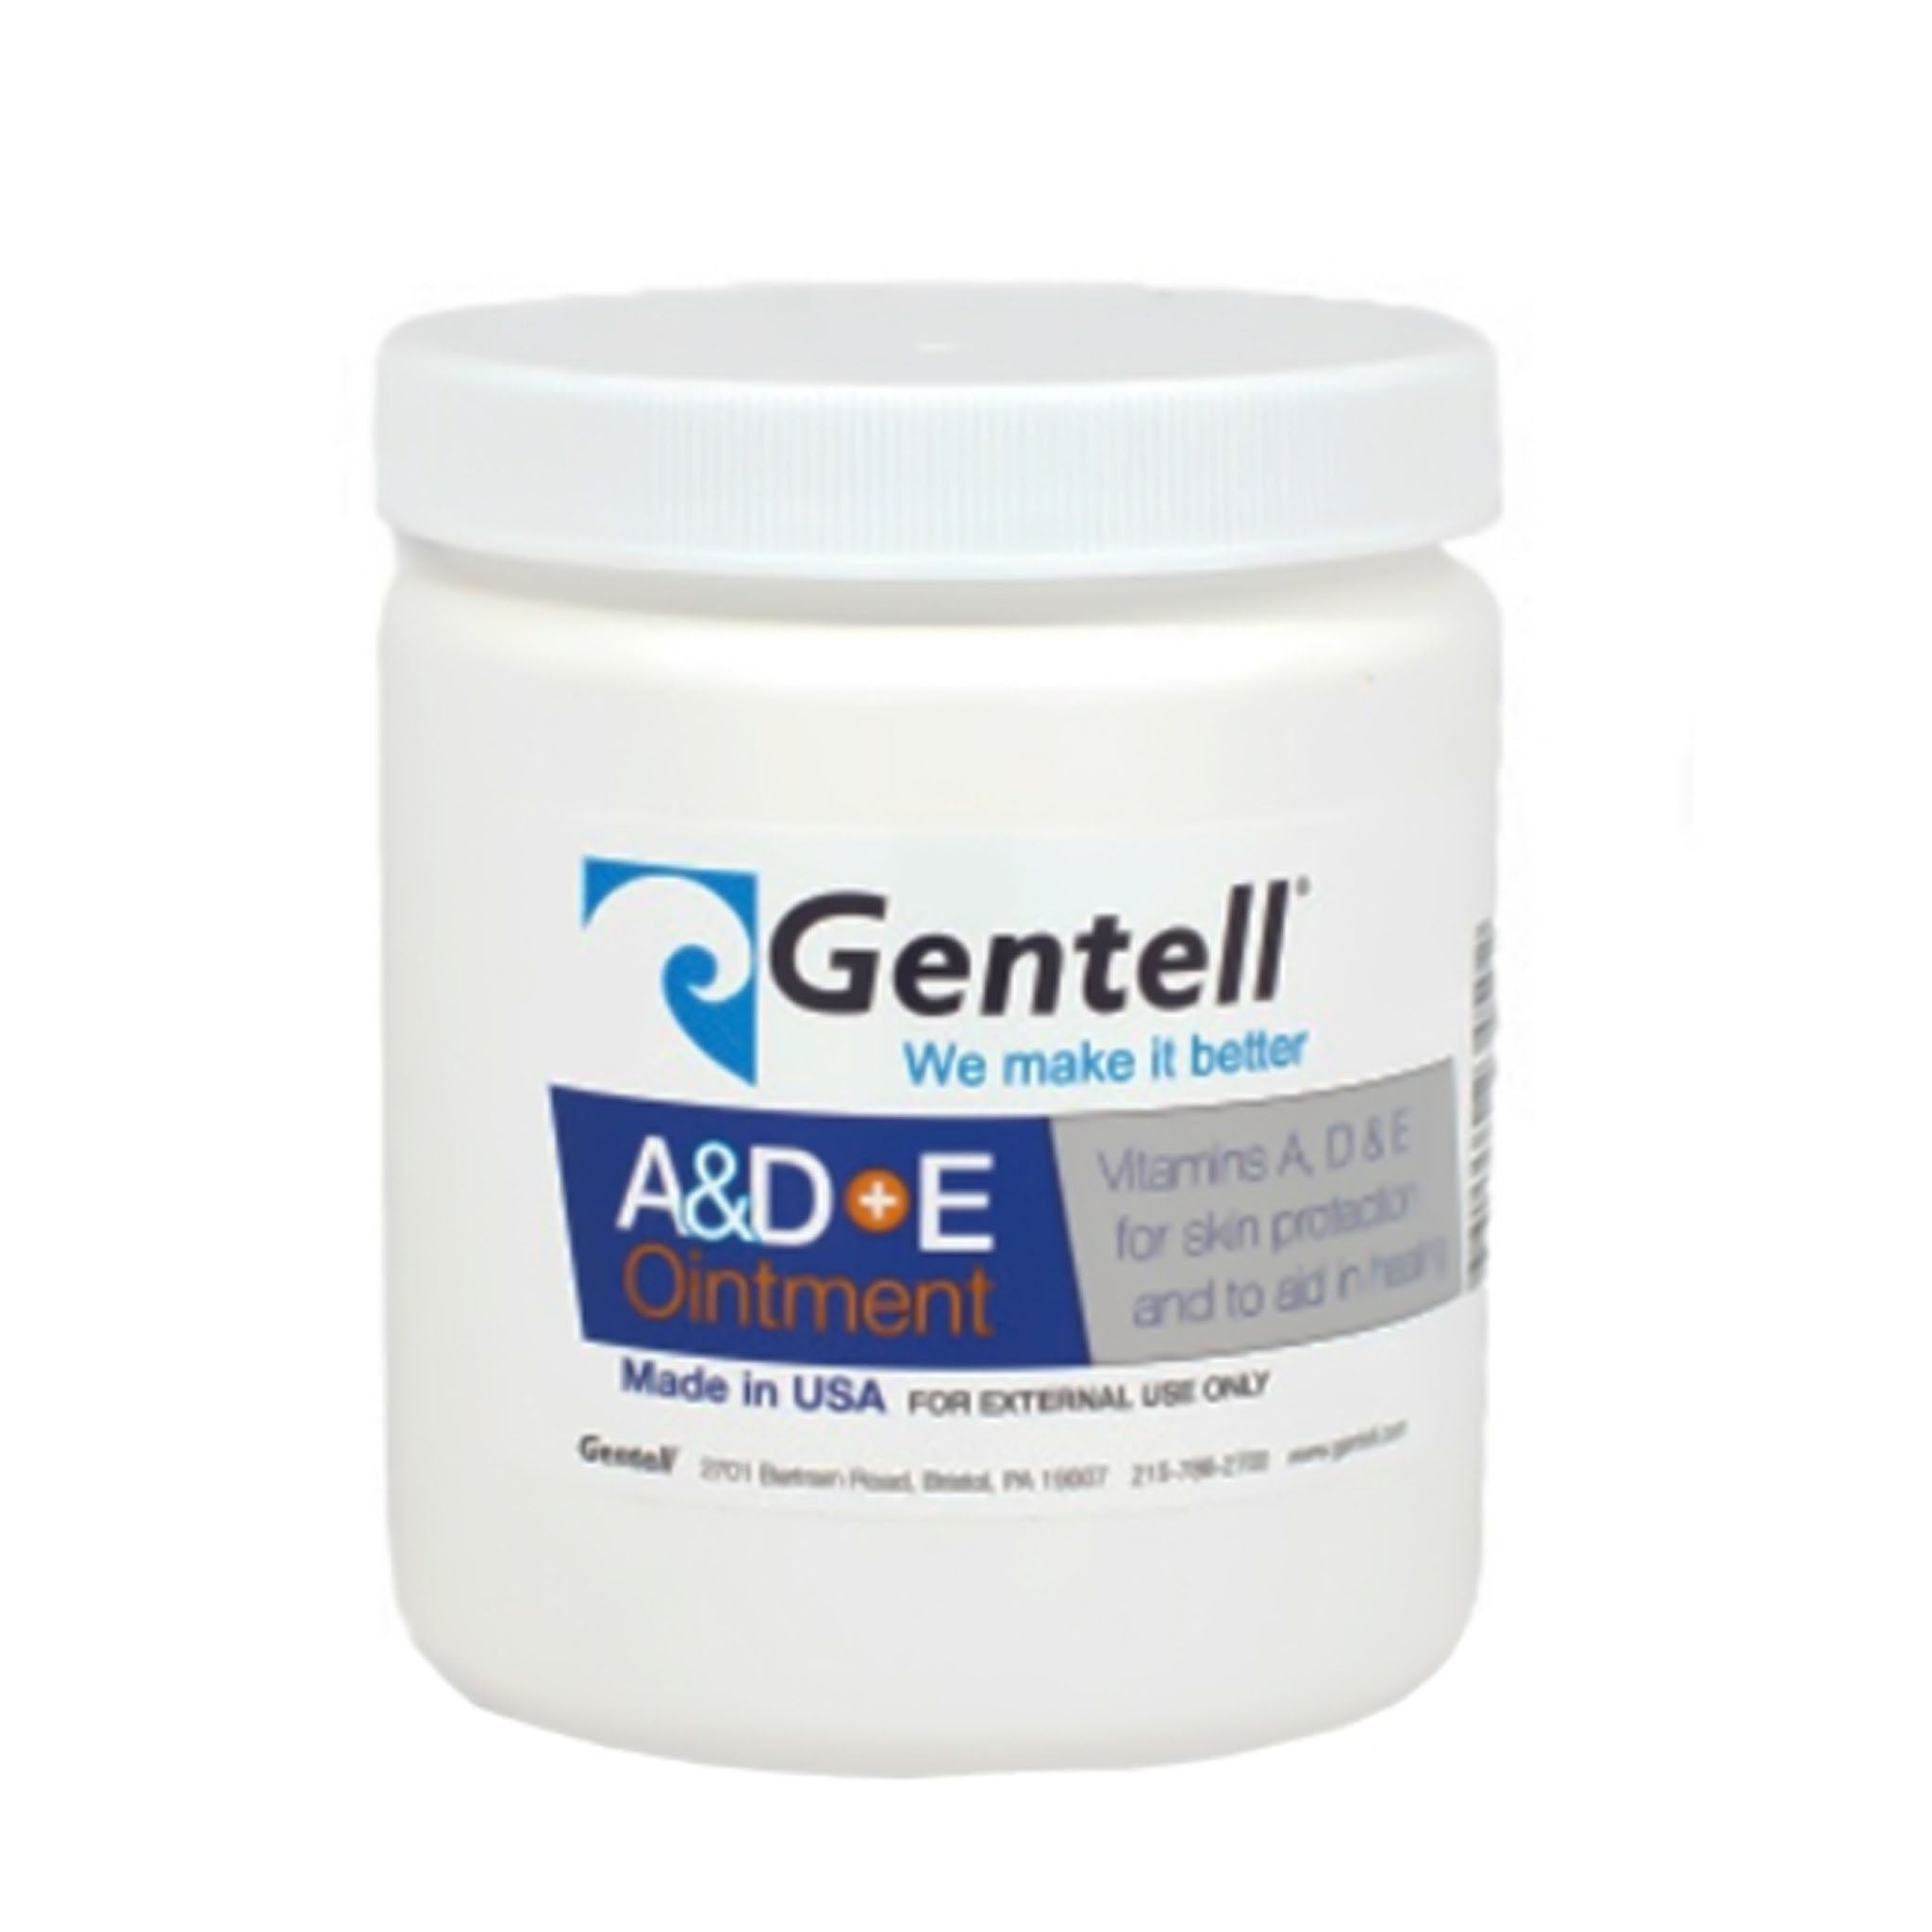 Gentell A&D+E Ointment Medicinal Scent 16 oz. Jar